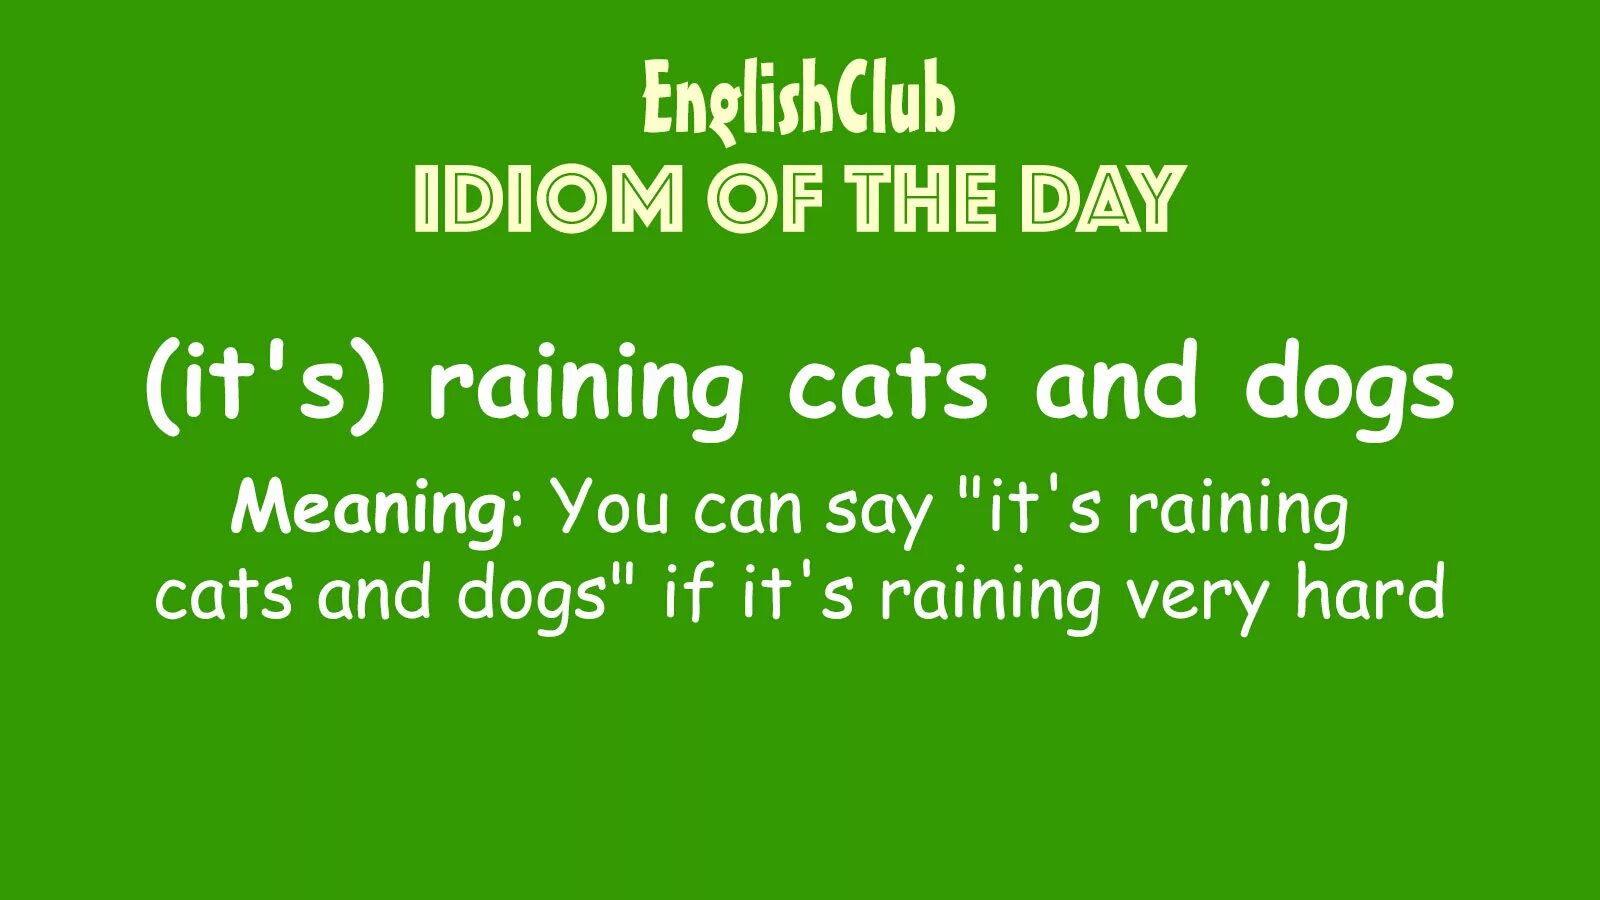 Cats and Dogs идиома. Идиомы raining Cats and Dogs. Идиома it's raining Cats and Dogs. Rain Cats and Dogs идиома.